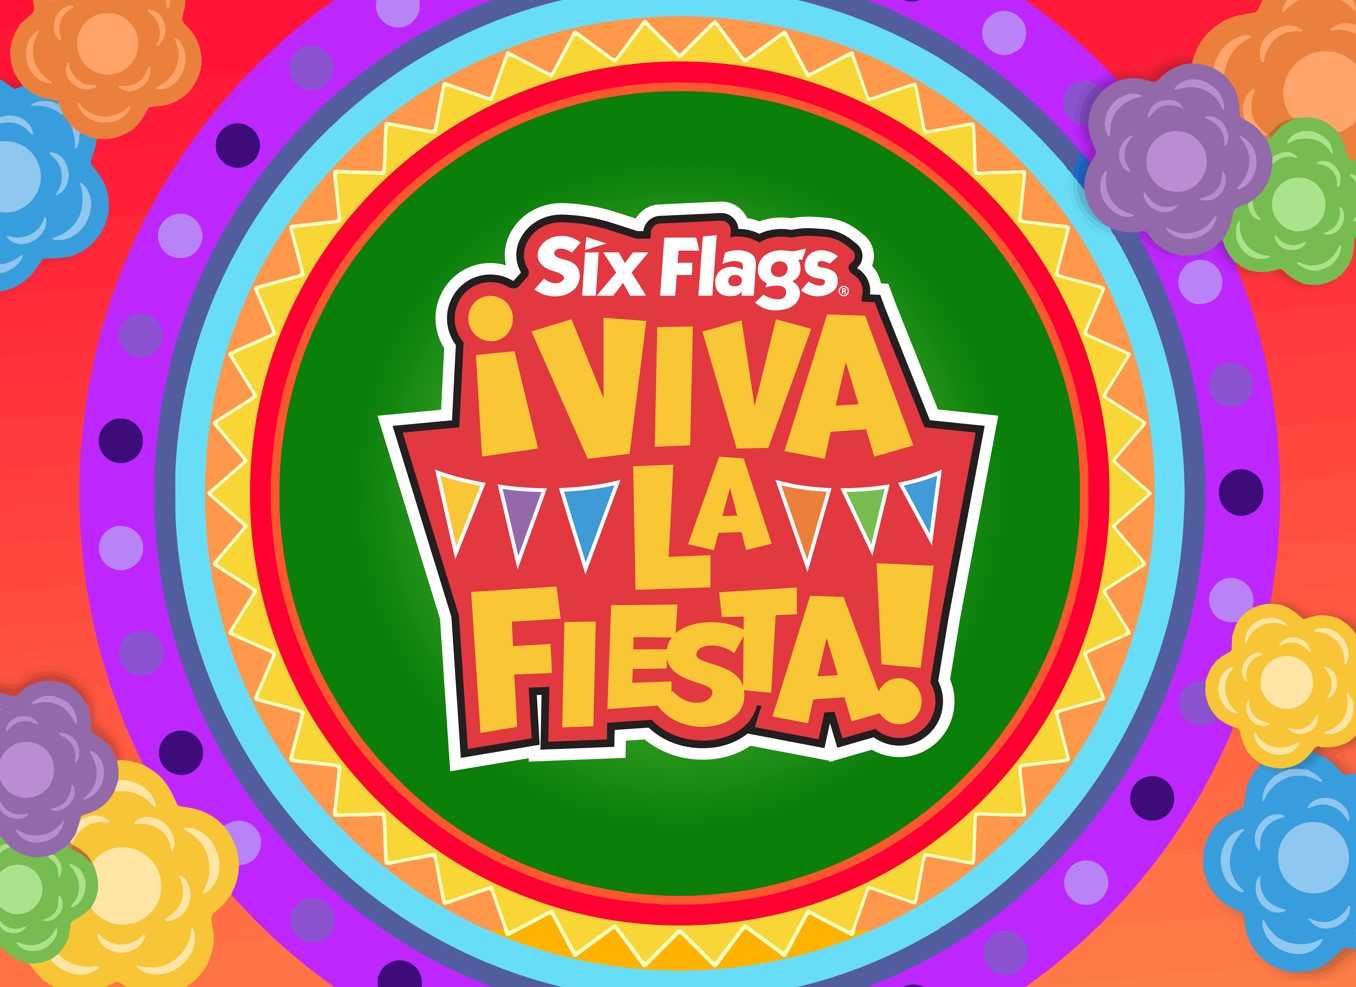 ¡Viva La Fiesta! at Six Flags Great America